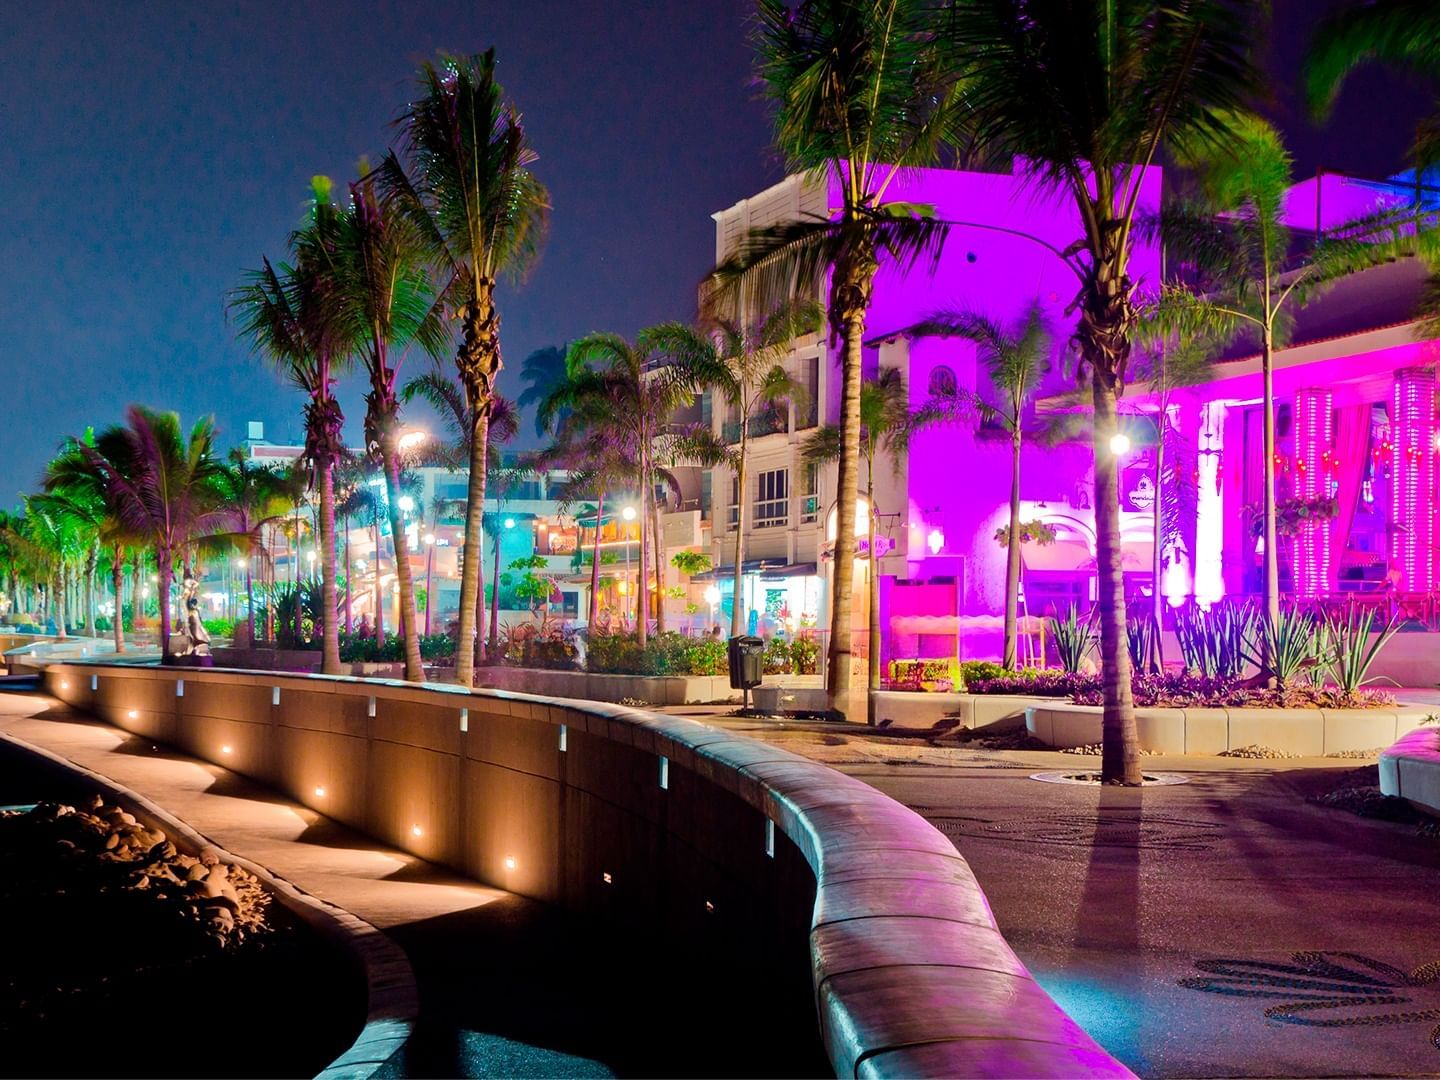 Night view of Puerto Vallarta Malecon beach pavilion near Plaza Pelicanos Club Beach Resort